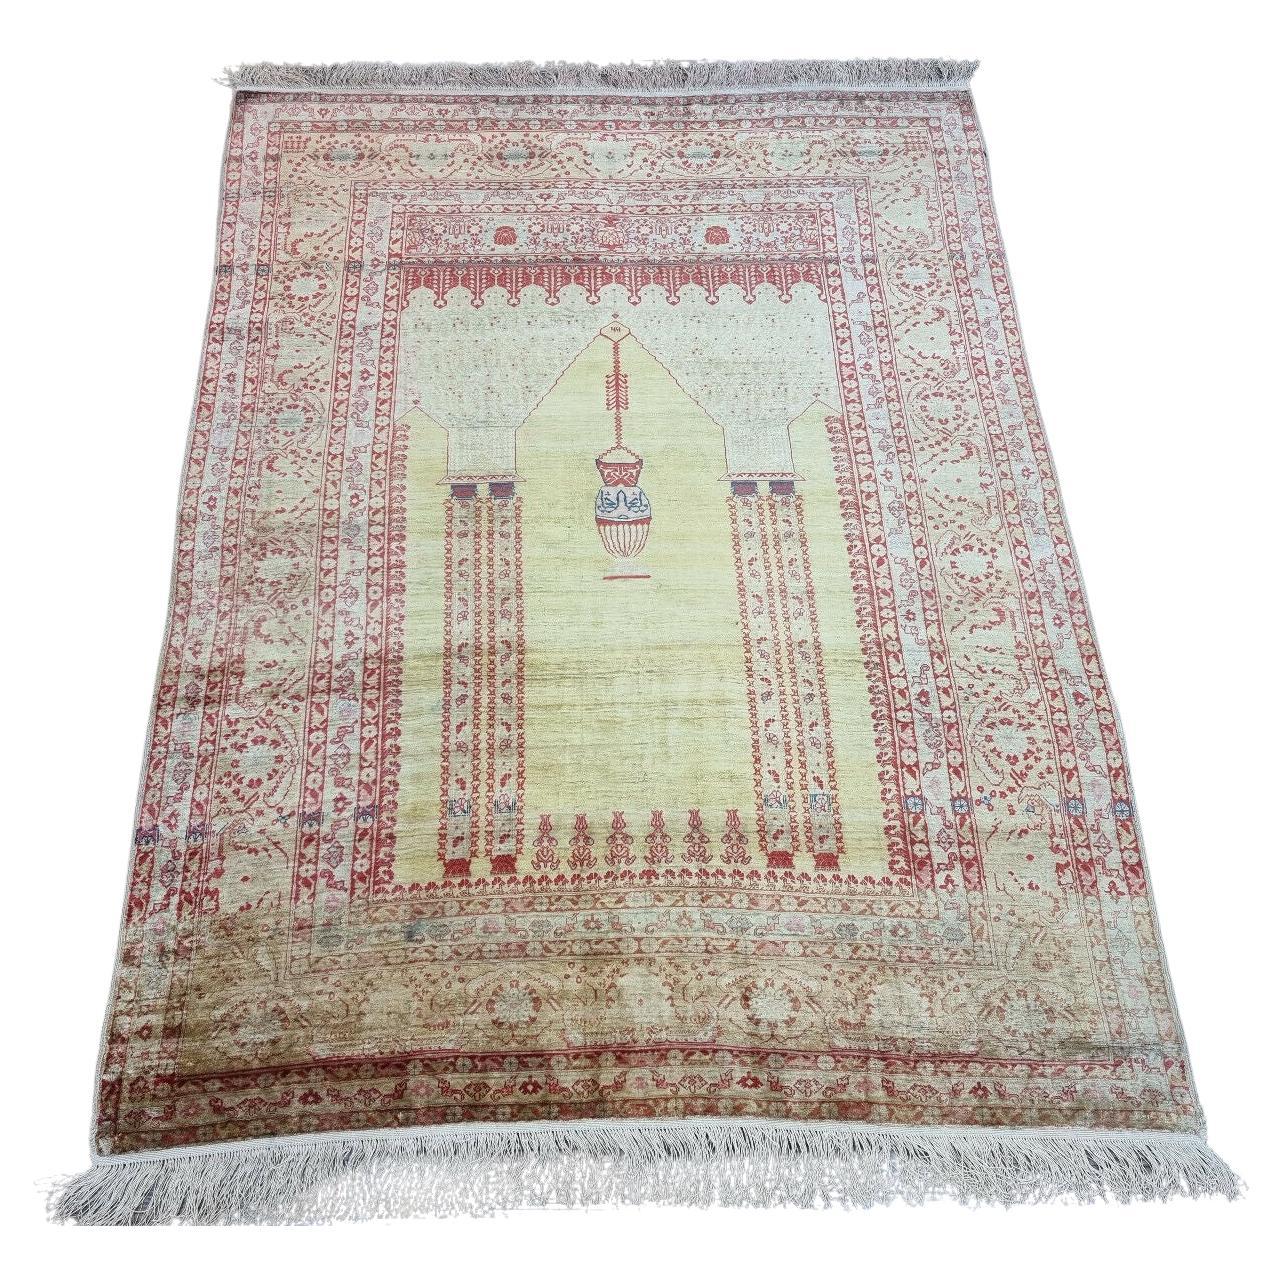 Handmade Antique Persian Style Tabriz Prayer Silk Rug 3.8' x 5', 1880s - 1D84 For Sale